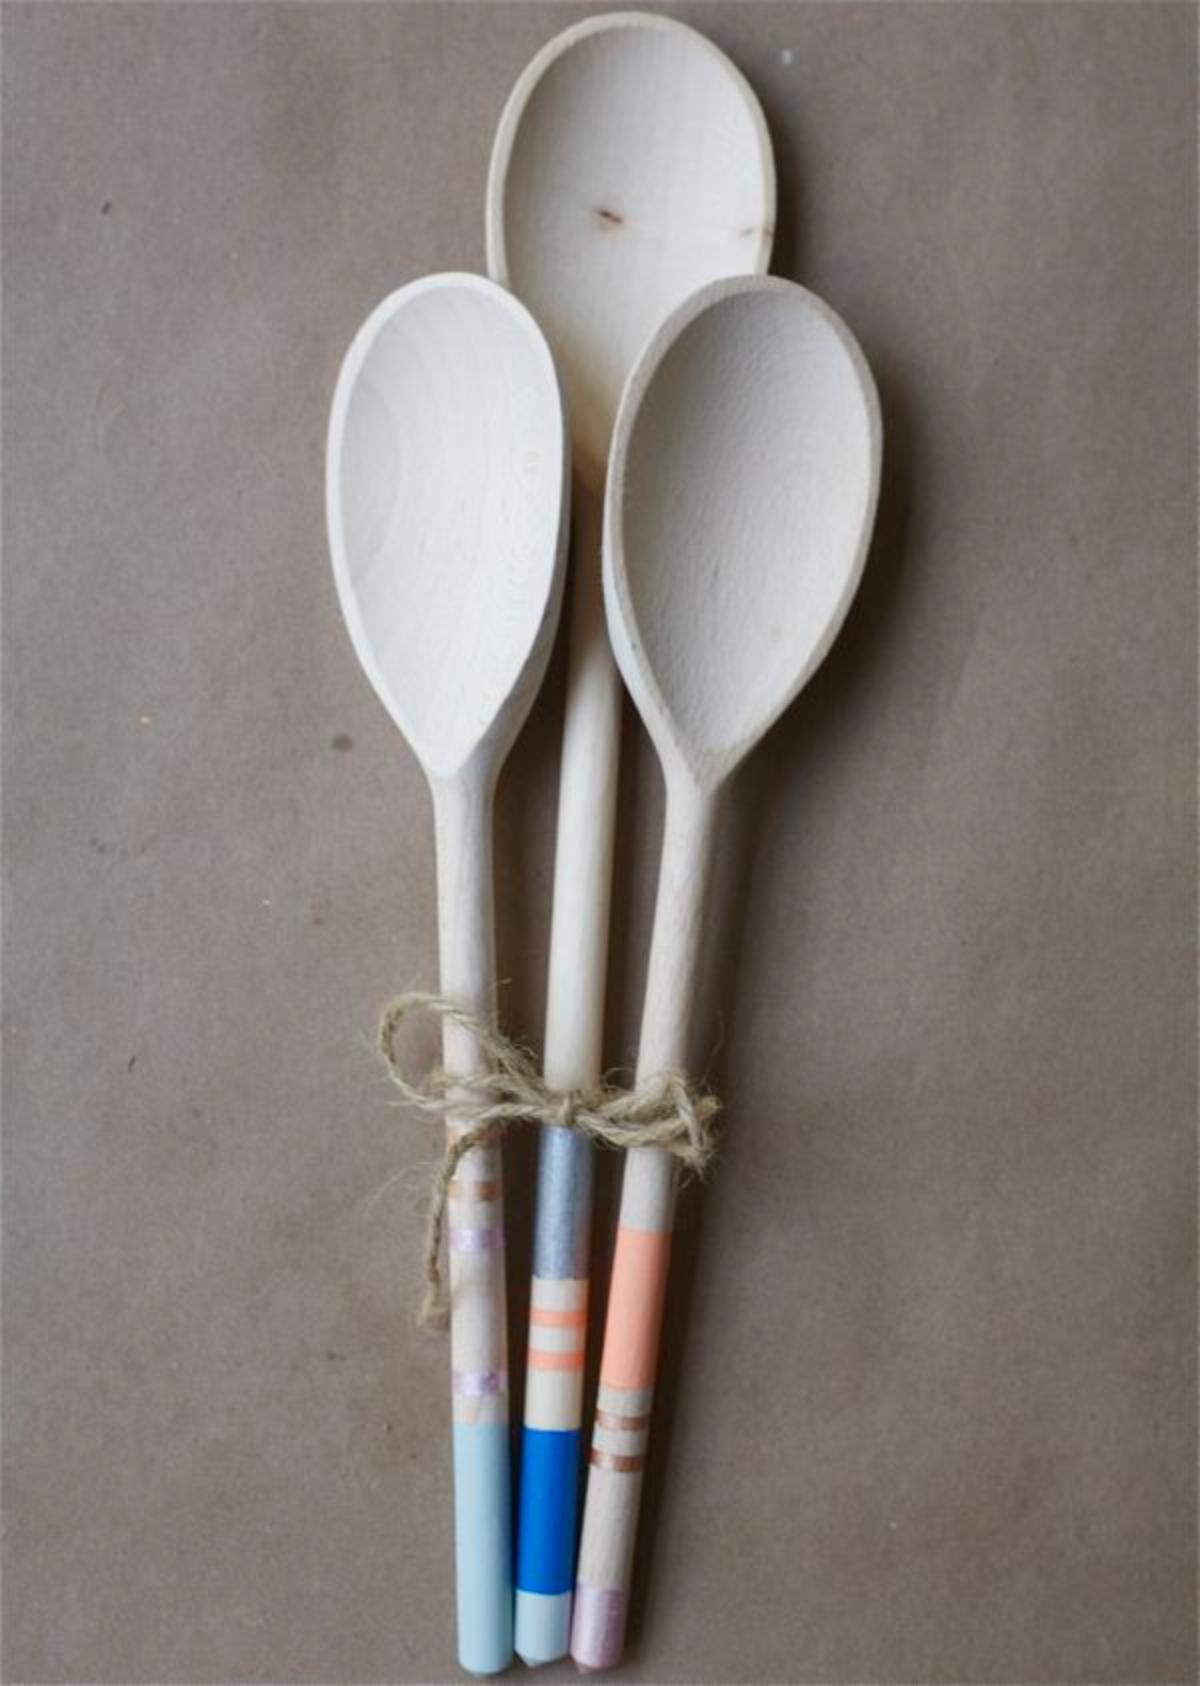 Paint Wooden Spoon Handles